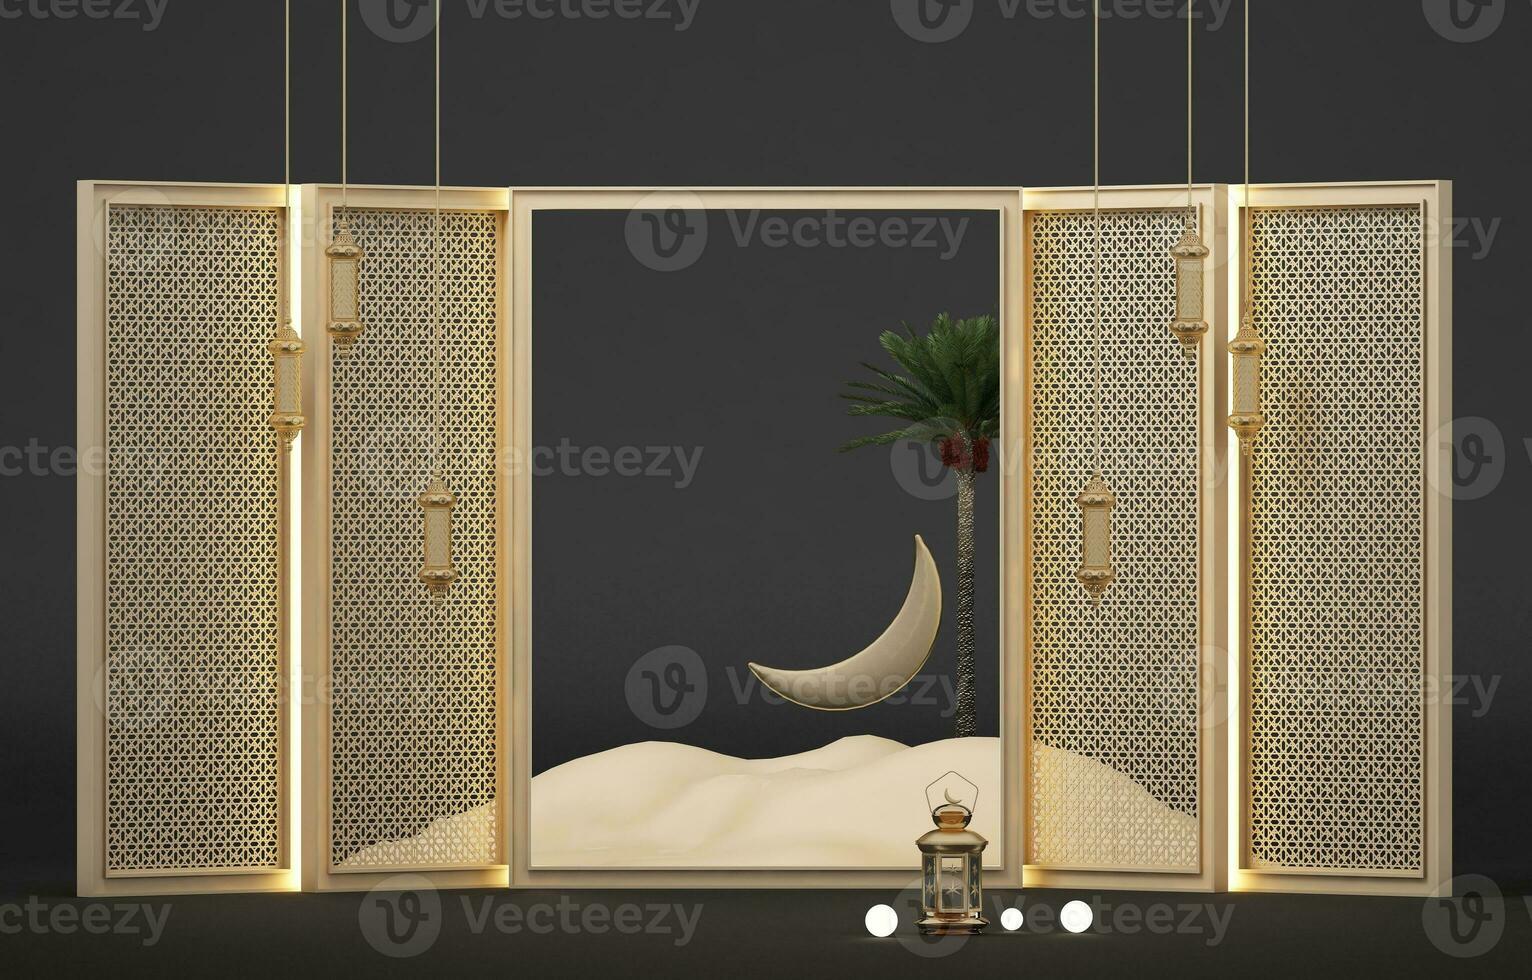 linterna, luna, desierto, y pared modelo con podio. 3d representación de moderno islámico tema pancartas antecedentes diseño modelo. 3d ilustración foto